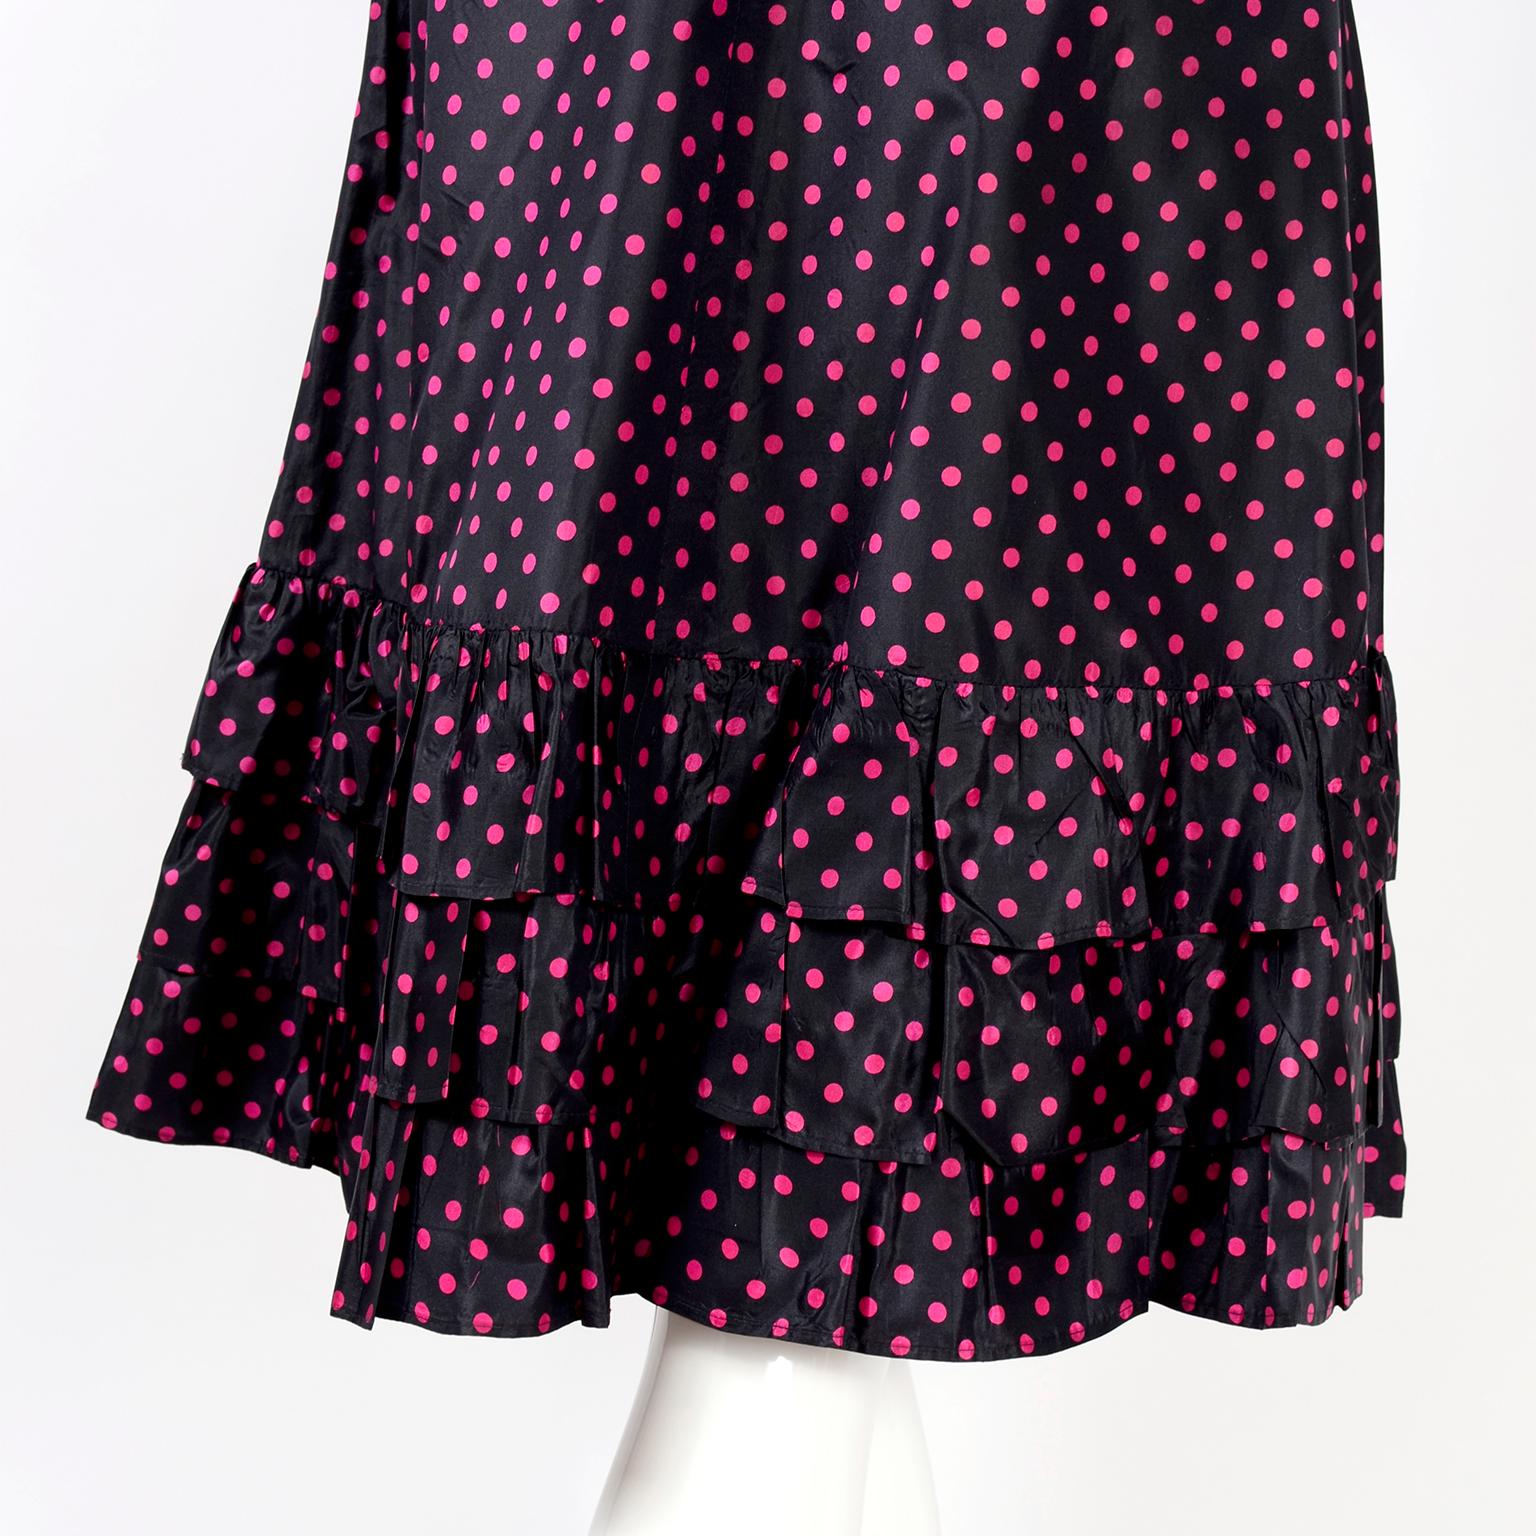 Saint Laurent Rive Gauche two-Piece Pink Polka Dot Ruffled Dress 2